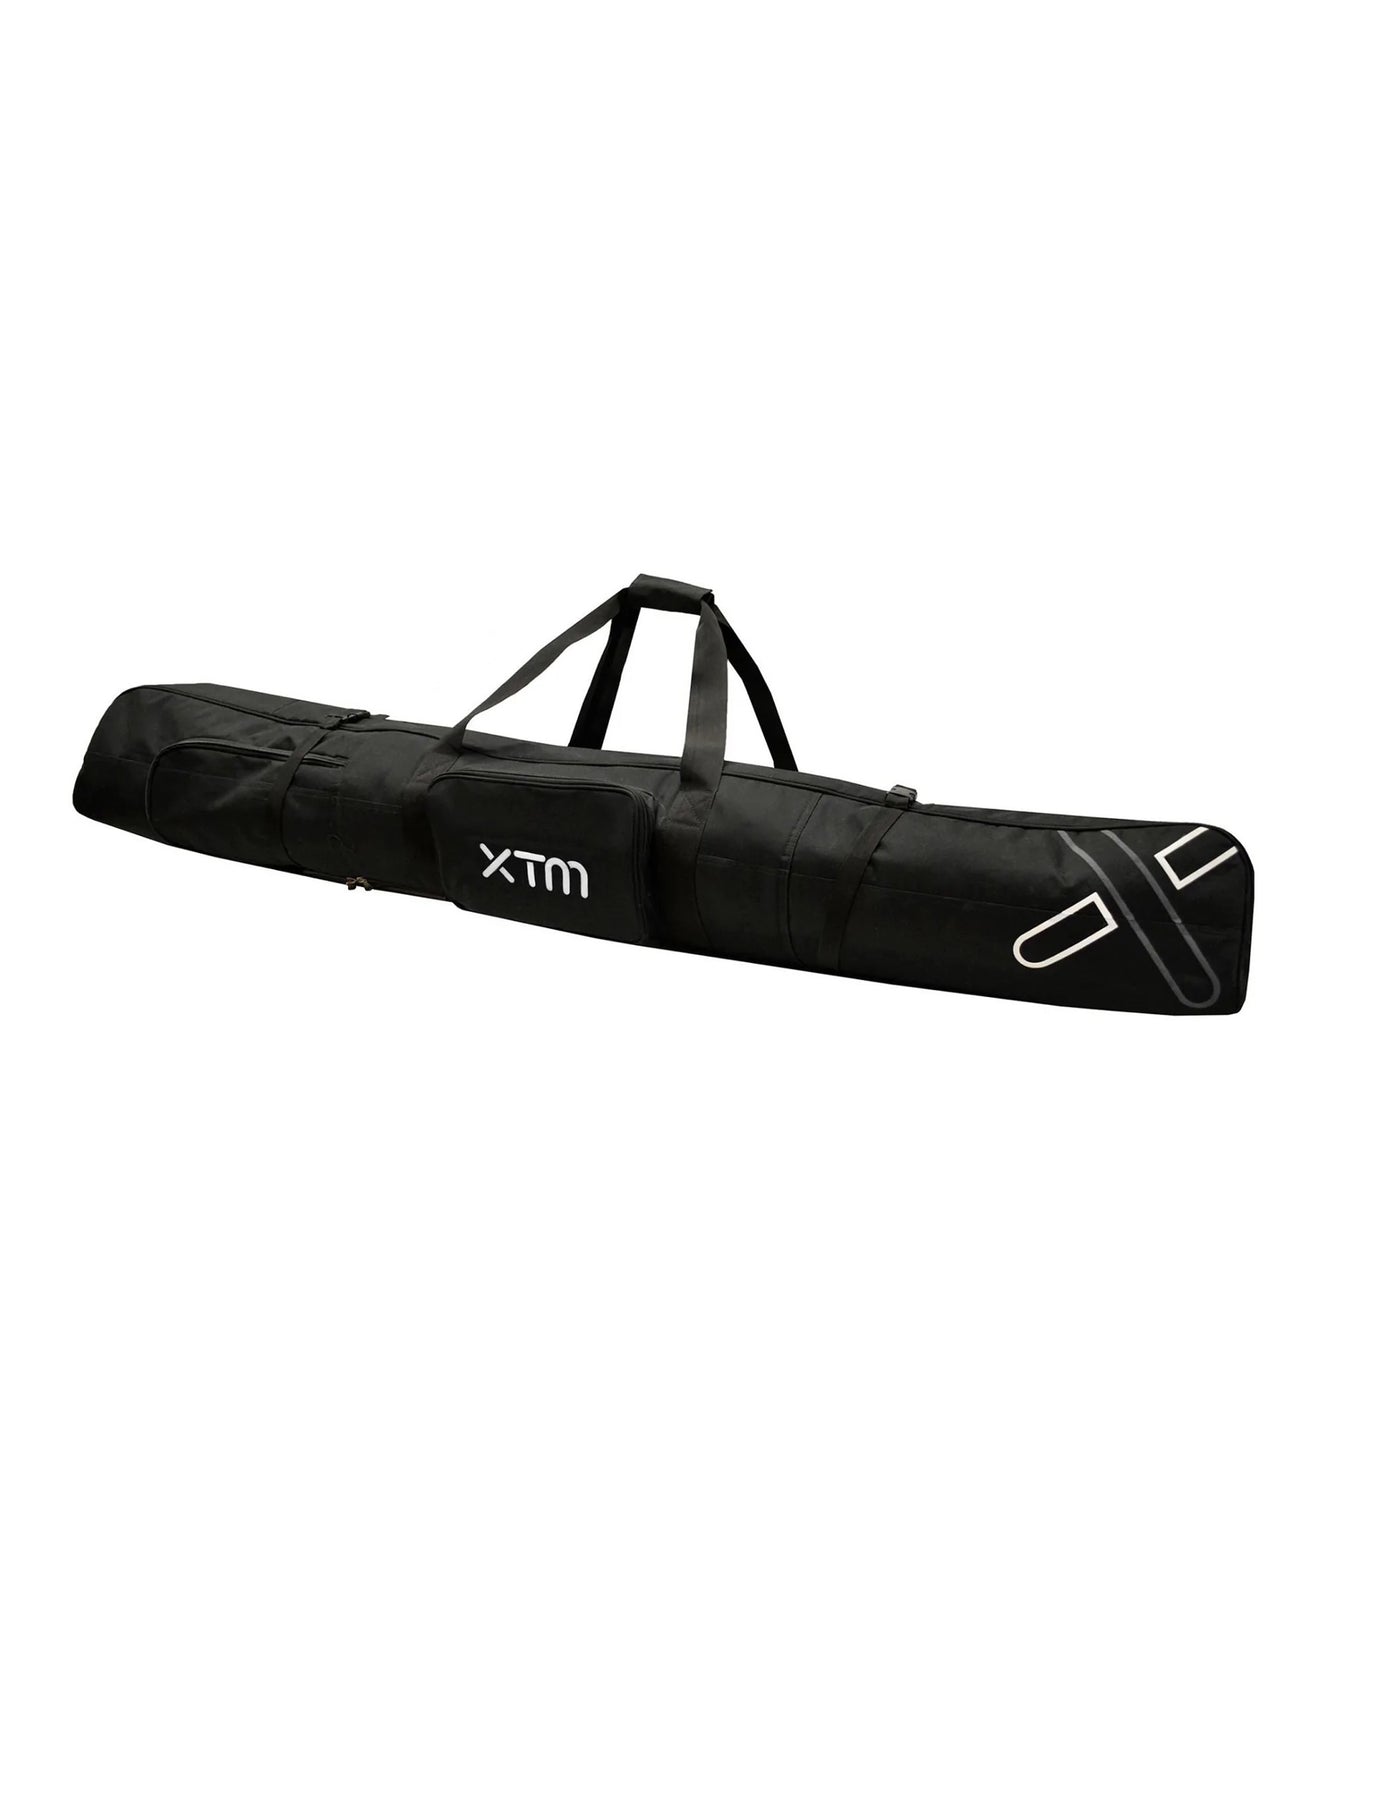 Snow Ski Bag XTM Double SKI BAG (2 pairs)